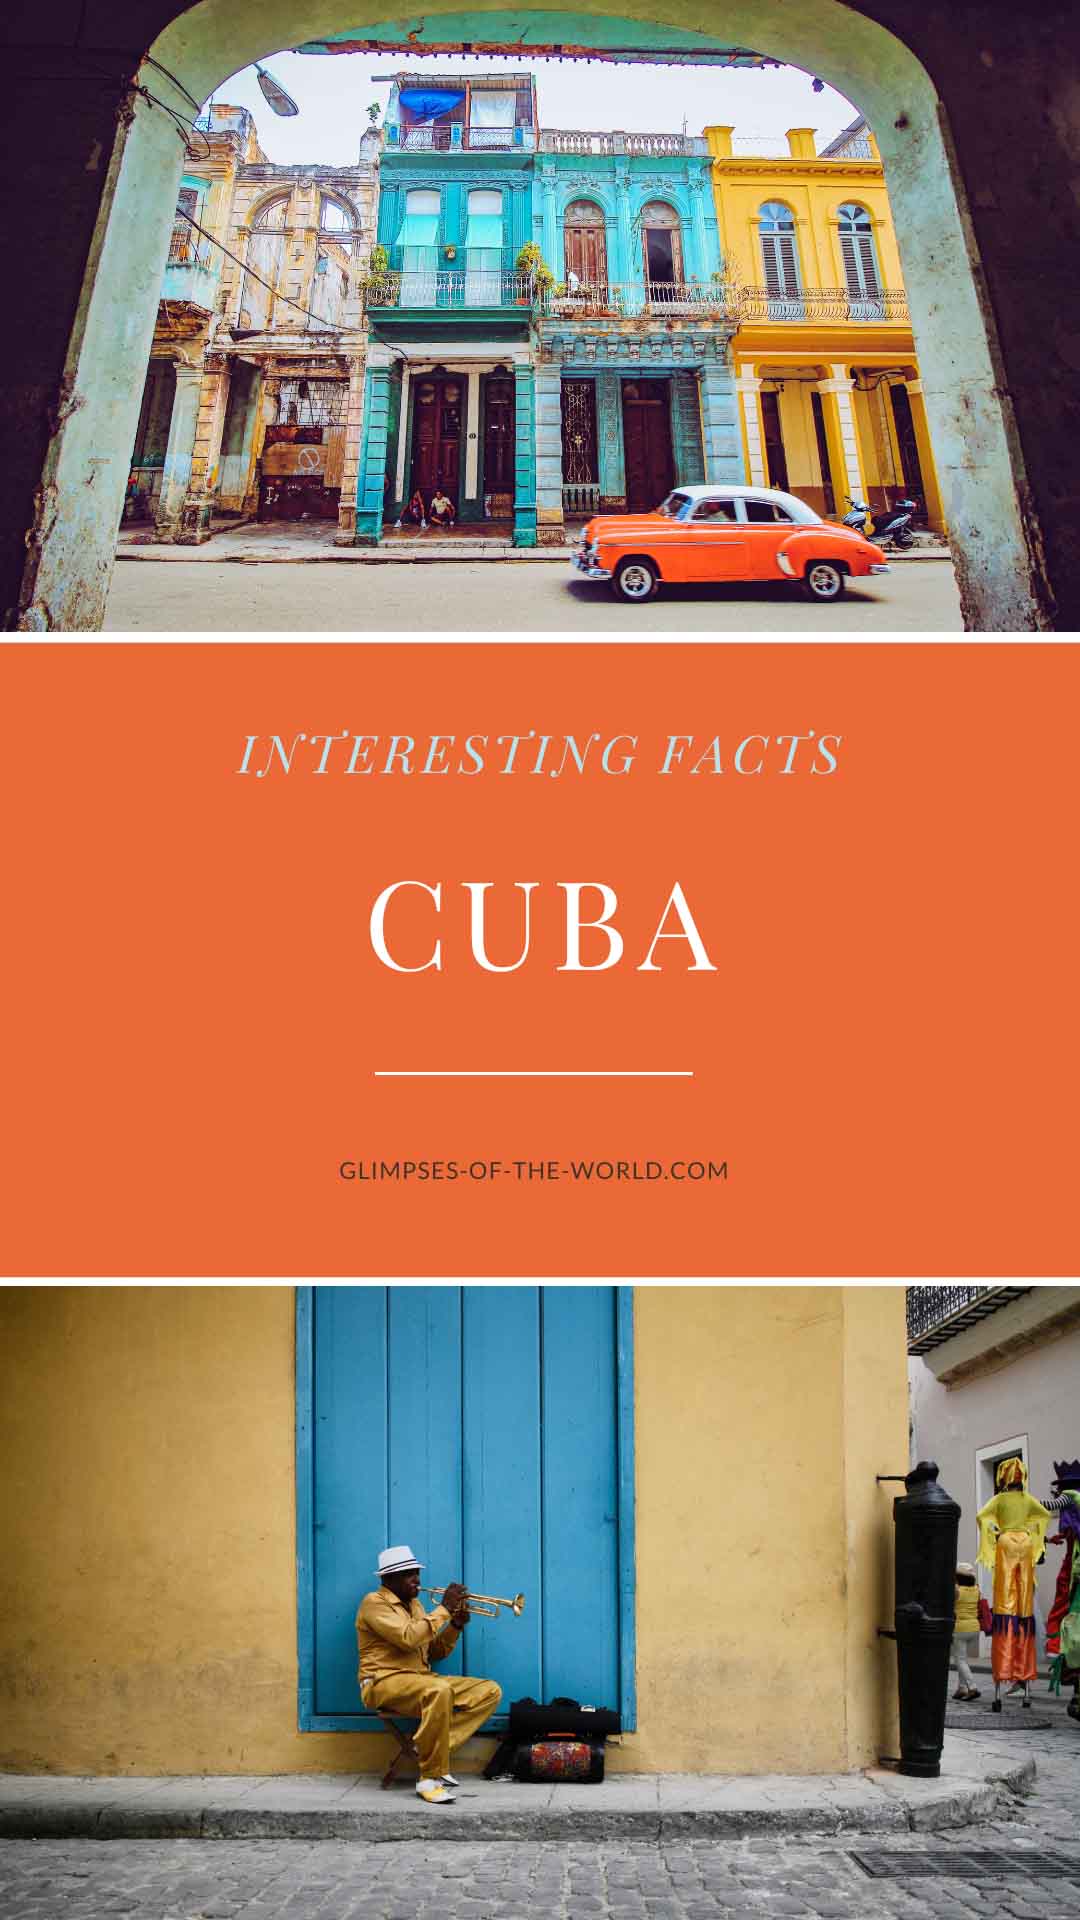 Cuba travelogue